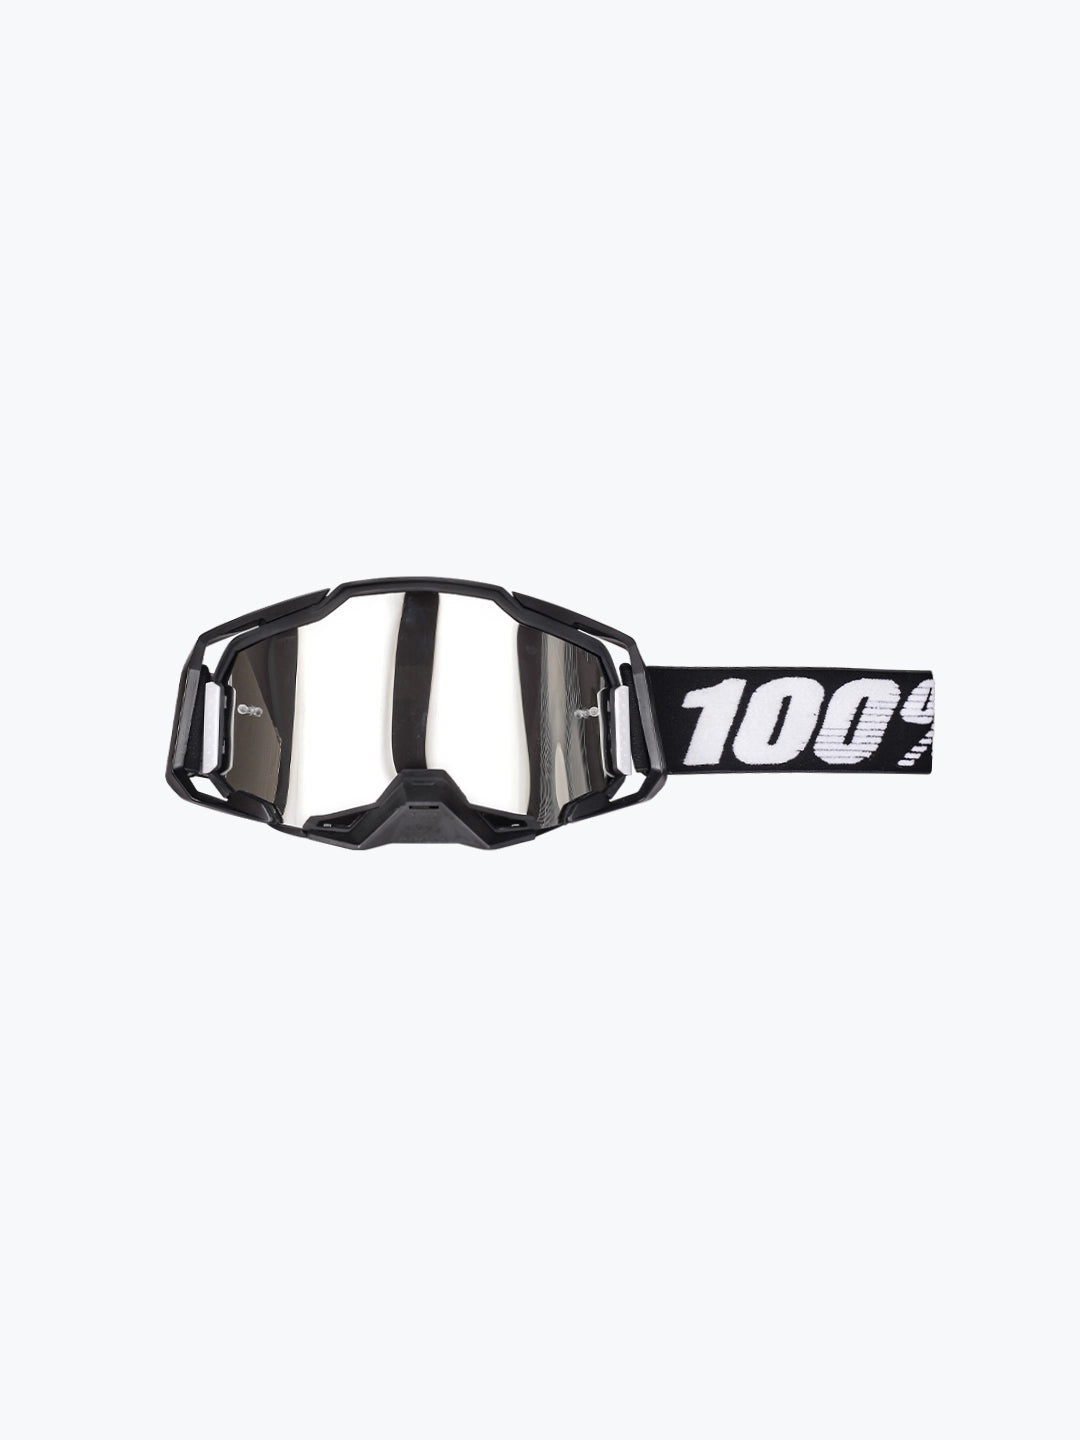 Goggles 100% - 147 Chrome Tint